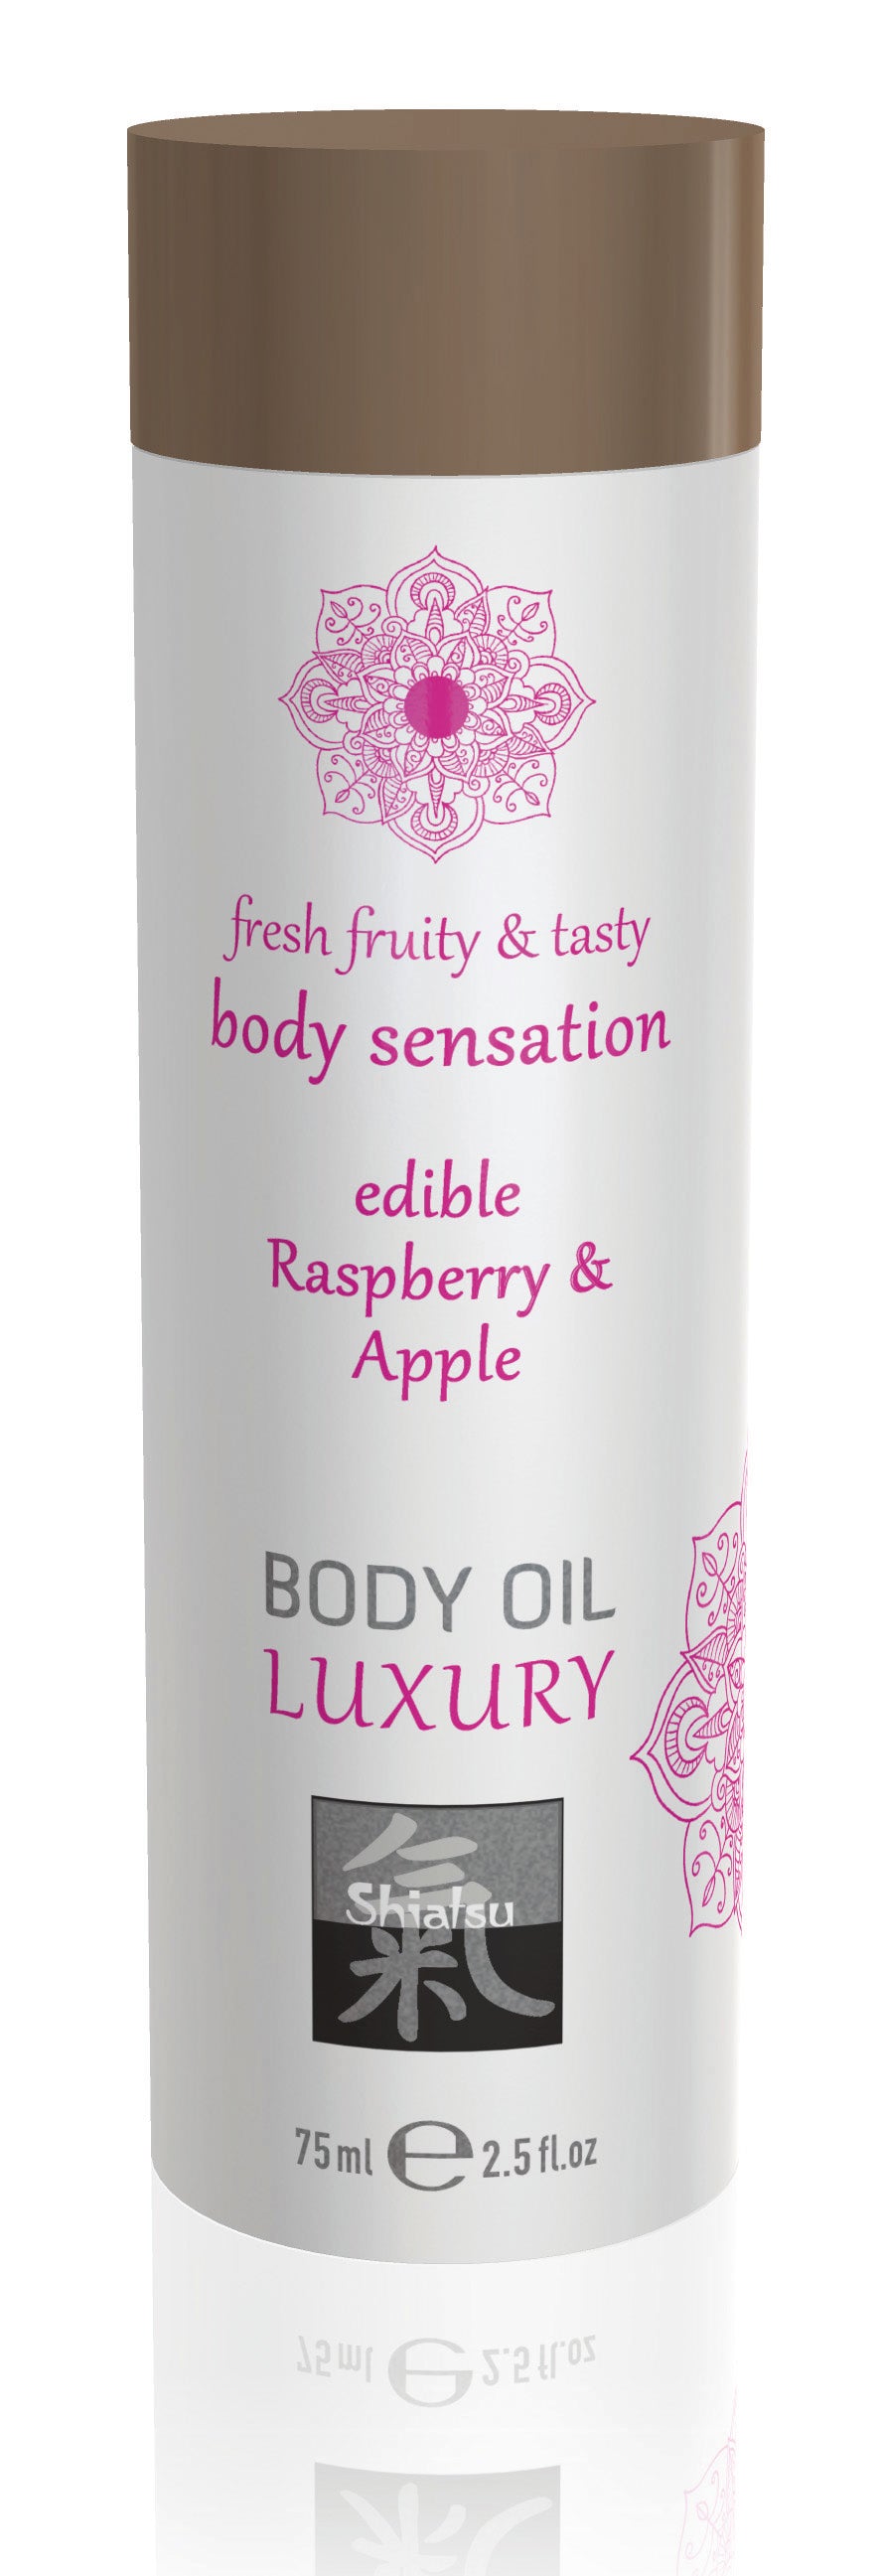 Shiatsu Luxury Body Oil Edible Raspberry and Apple